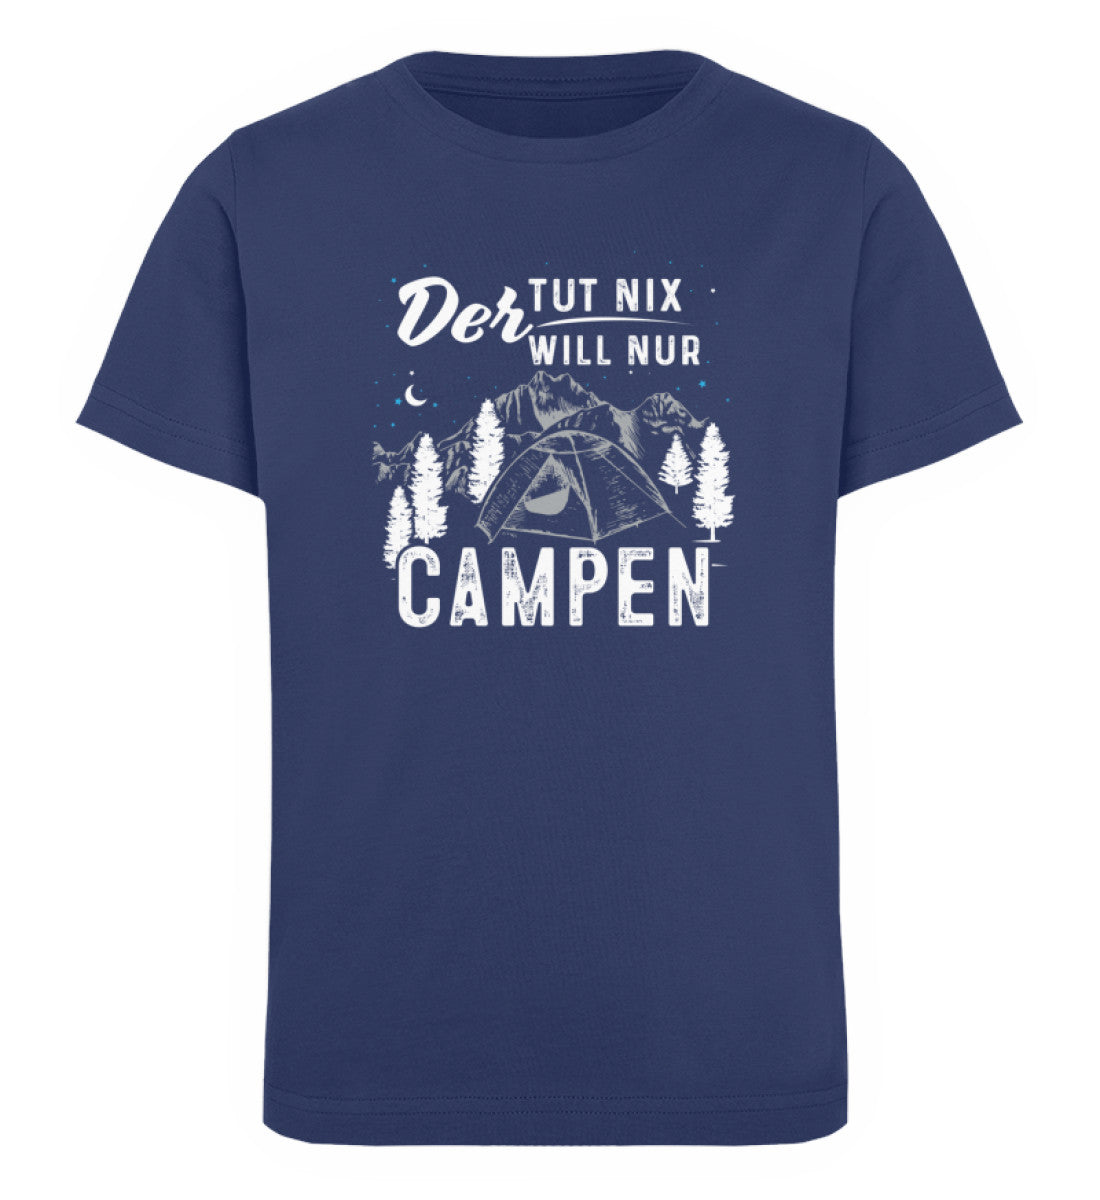 Der will nur campen - Kinder Premium Organic T-Shirt camping Navyblau